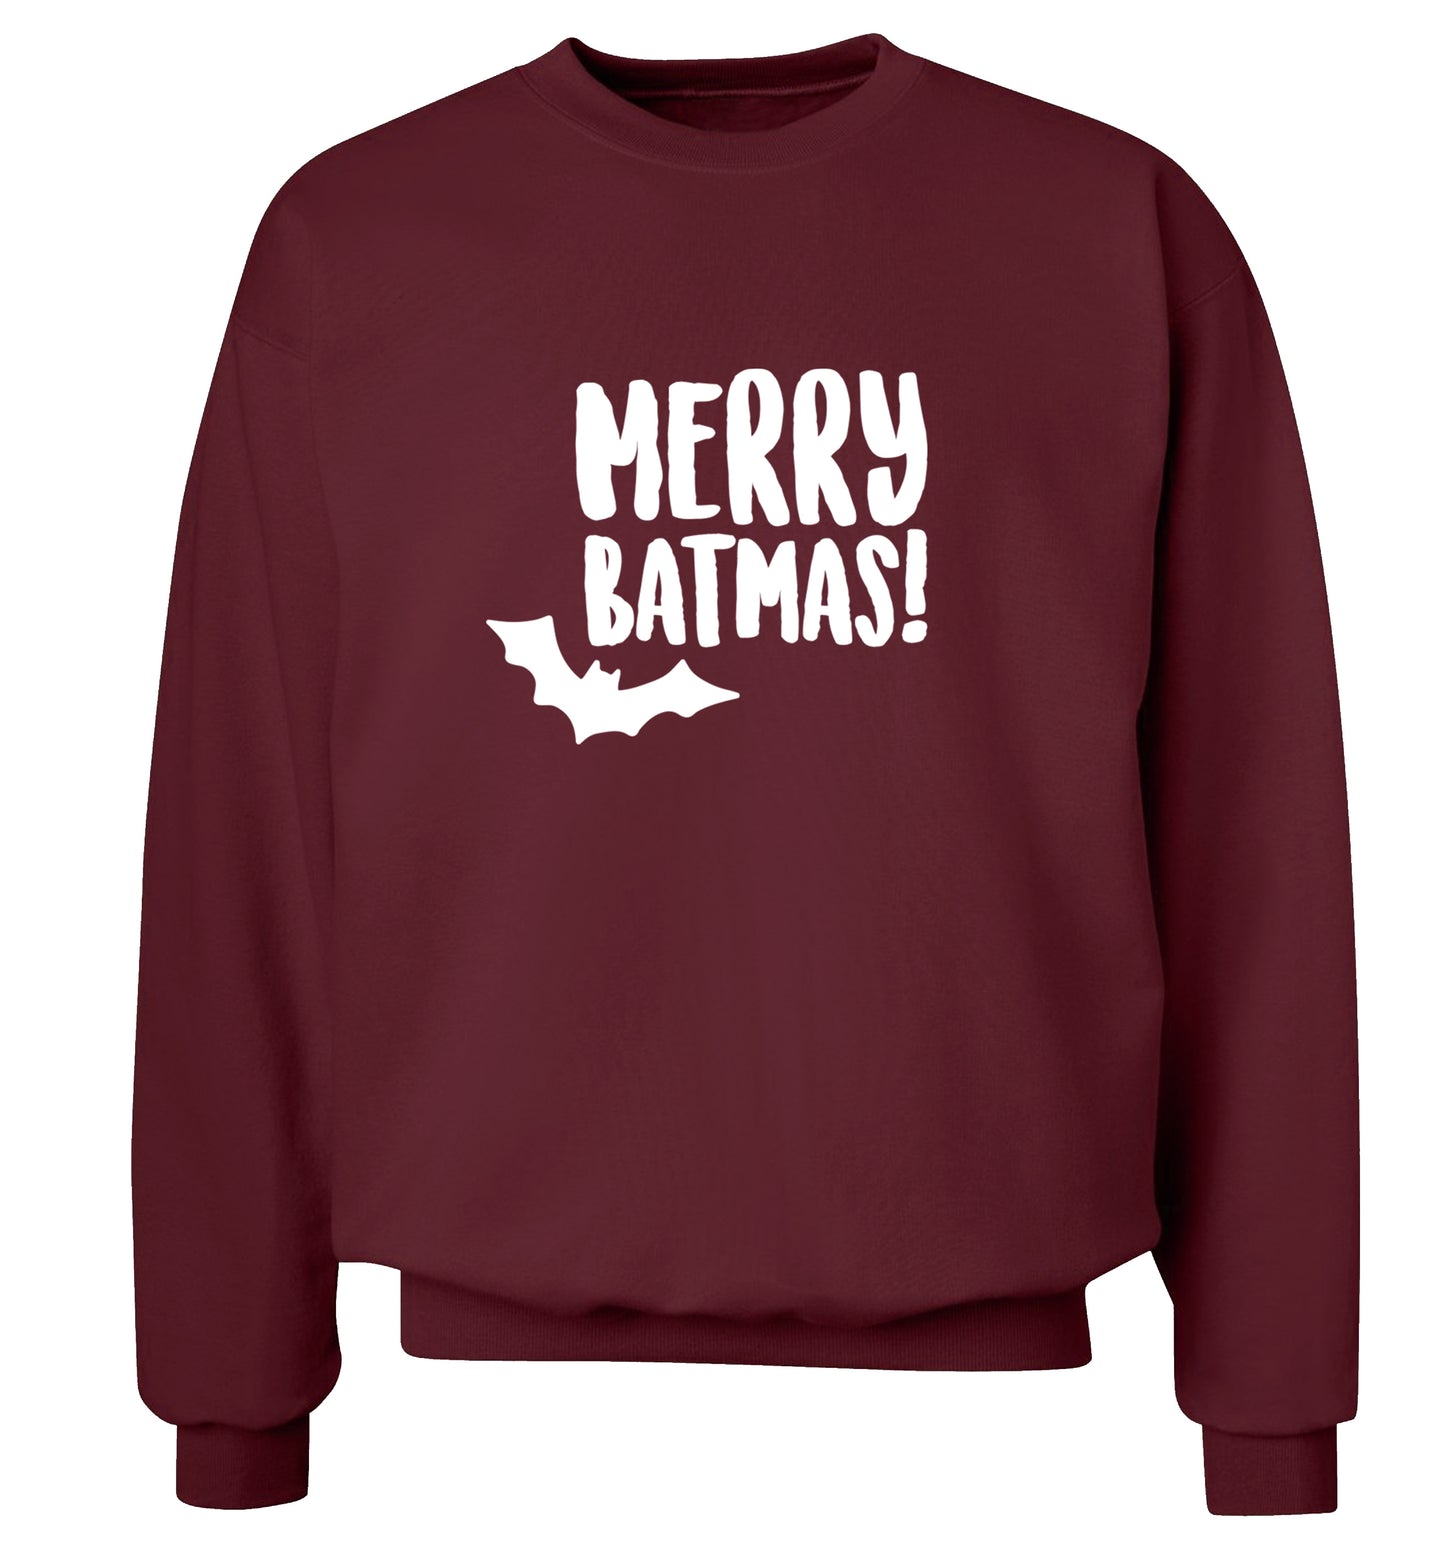 Merry Batmas Adult's unisex maroon Sweater 2XL